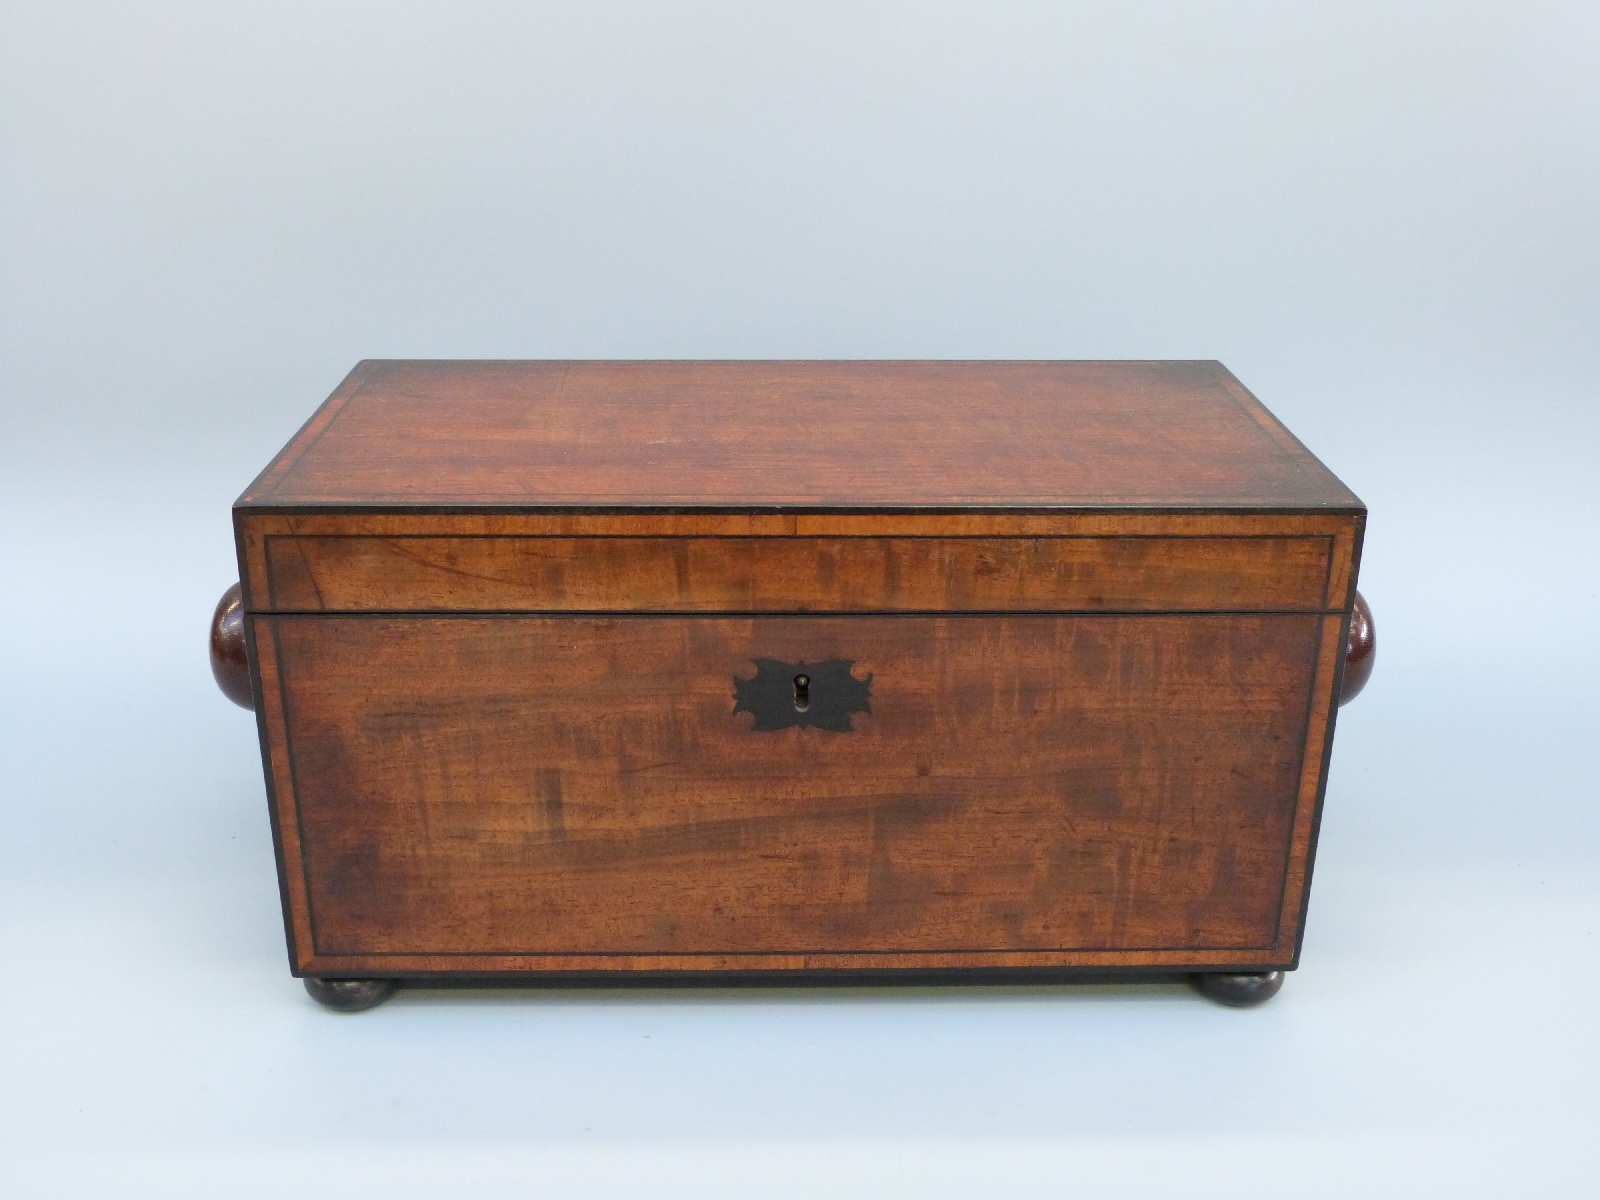 An early 19thC mahogany tea caddy of rectangular form with inlaid ebony detail, raised on bun feet, - Image 5 of 8